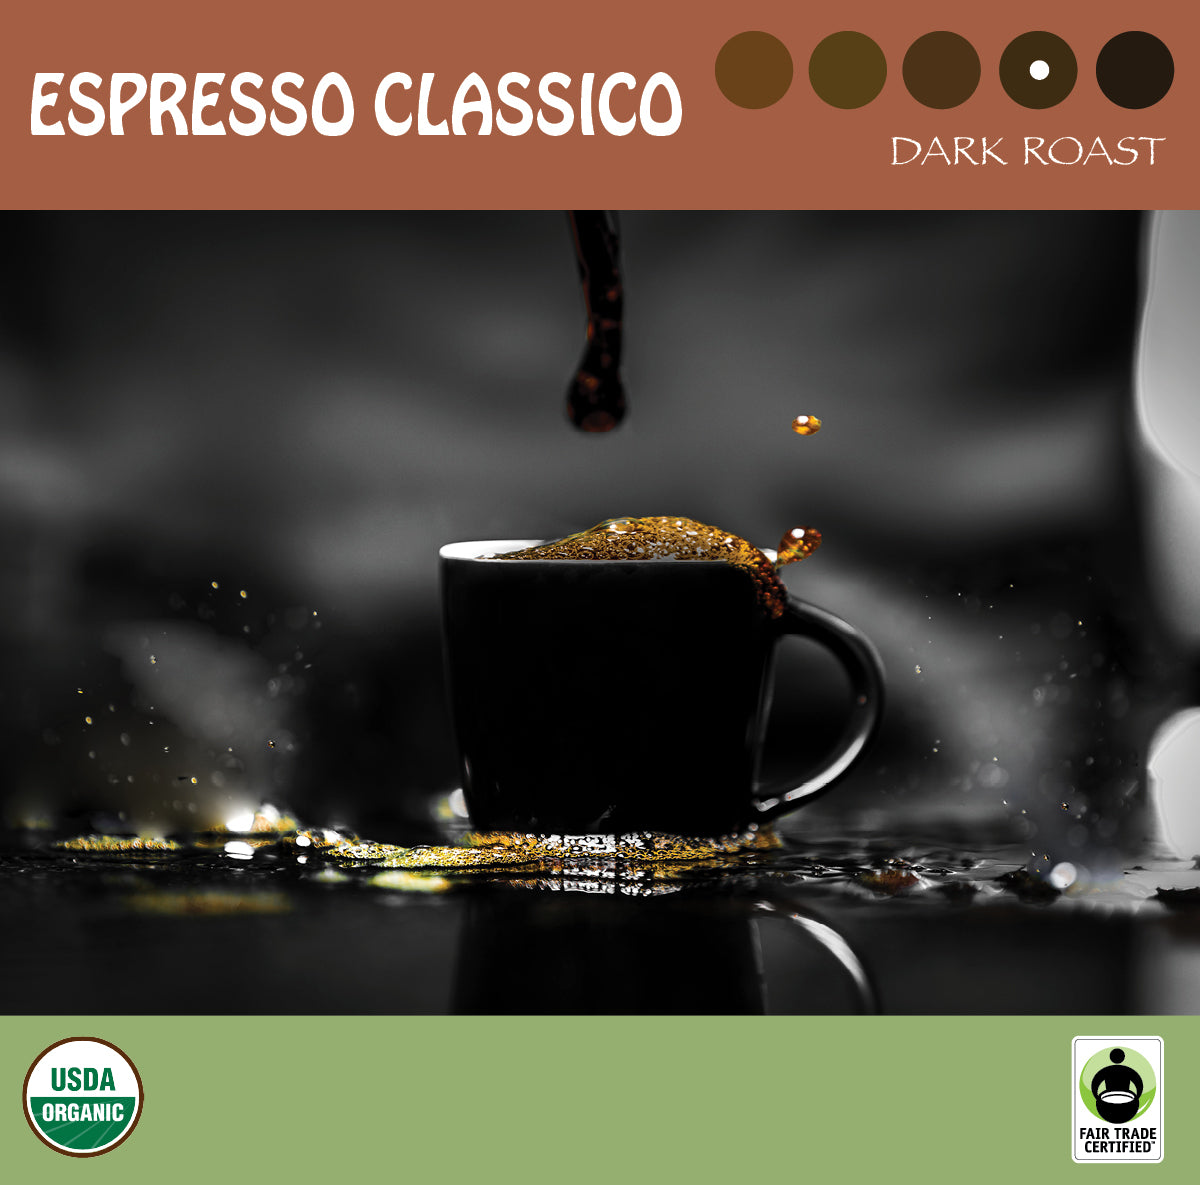 Very dark coffee dripping out of an espresso machine. Signature Coffee's dark roast Espresso Classico Blend. USDA organic and Fair Trade-certified logos.